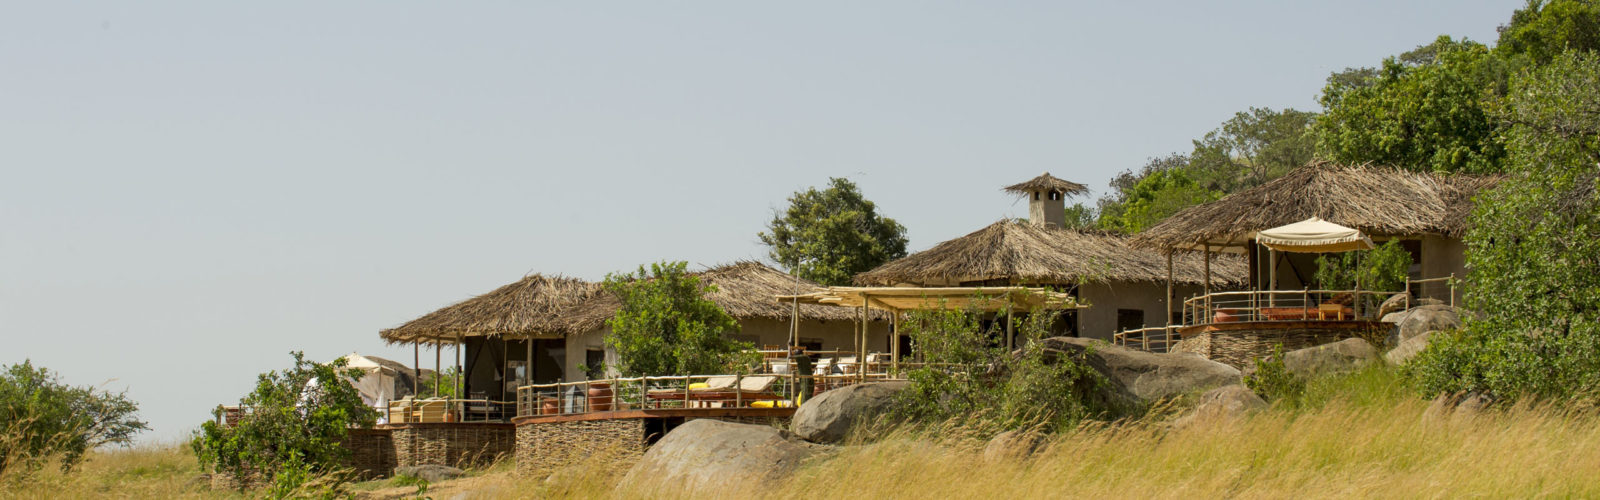 Exterior of Mkombe's House Lamai set in the grassy plains of the Serengeti National Park, Tanzania